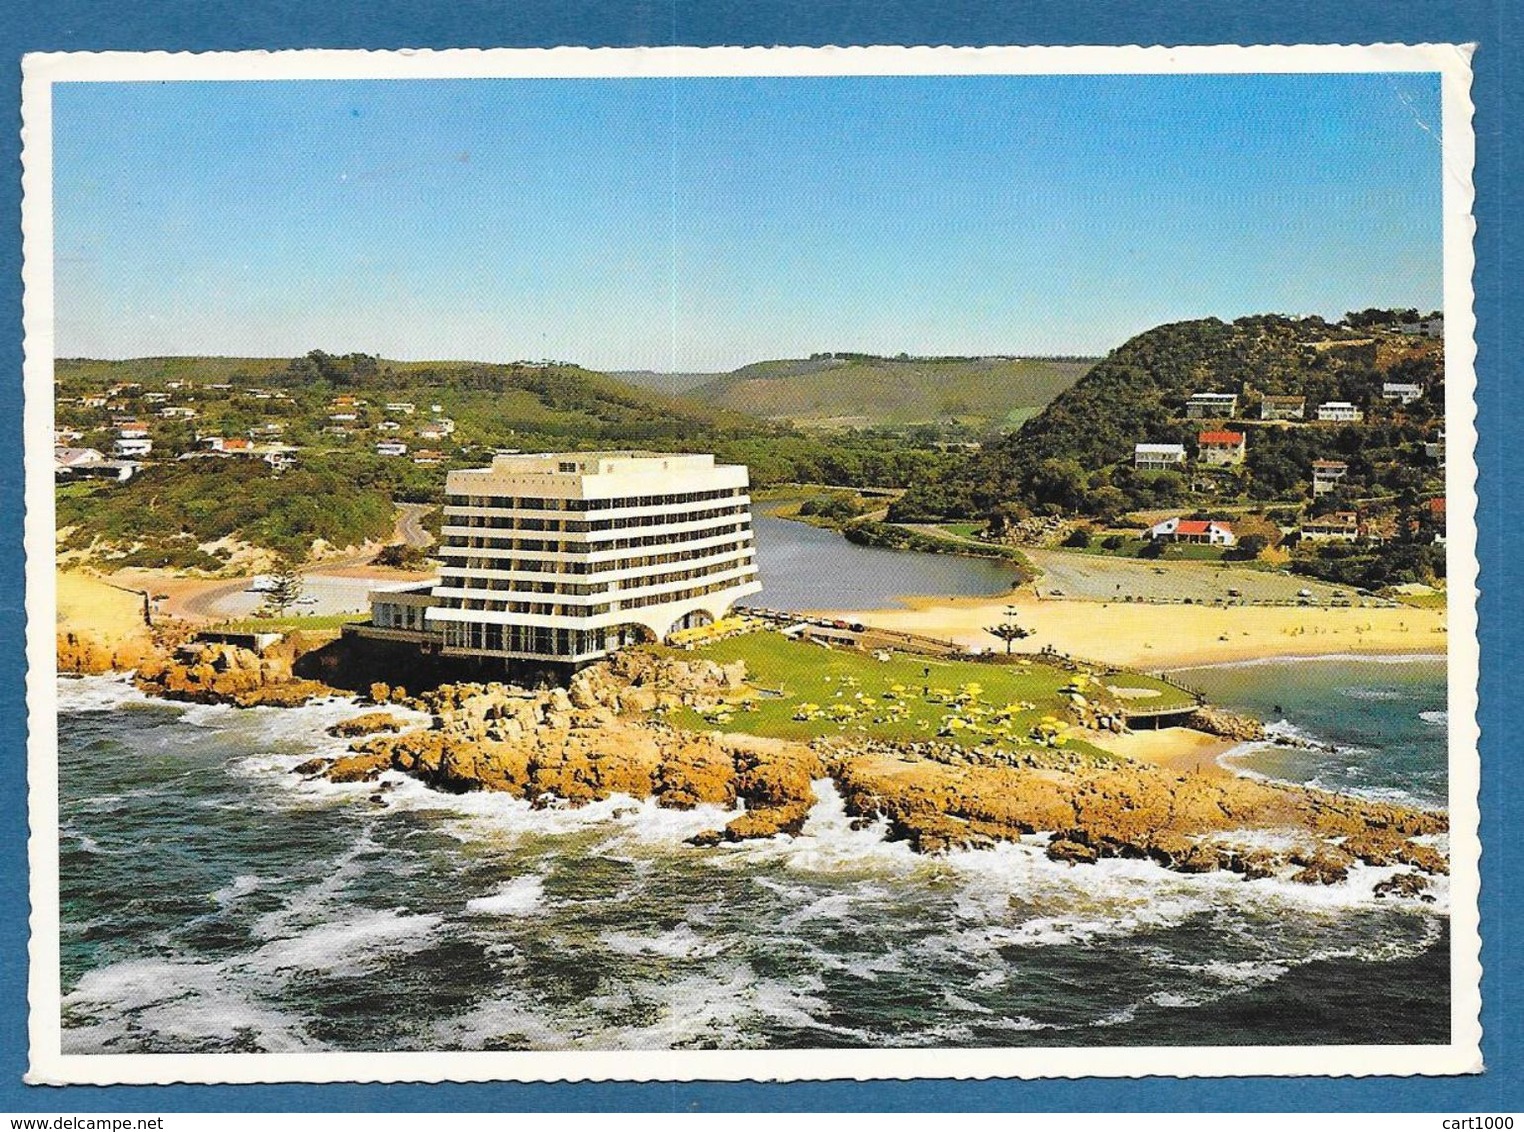 SOUTH AFRIKA PLETTENBERG BAY CAPE PROVINCE 1979 - Sud Africa